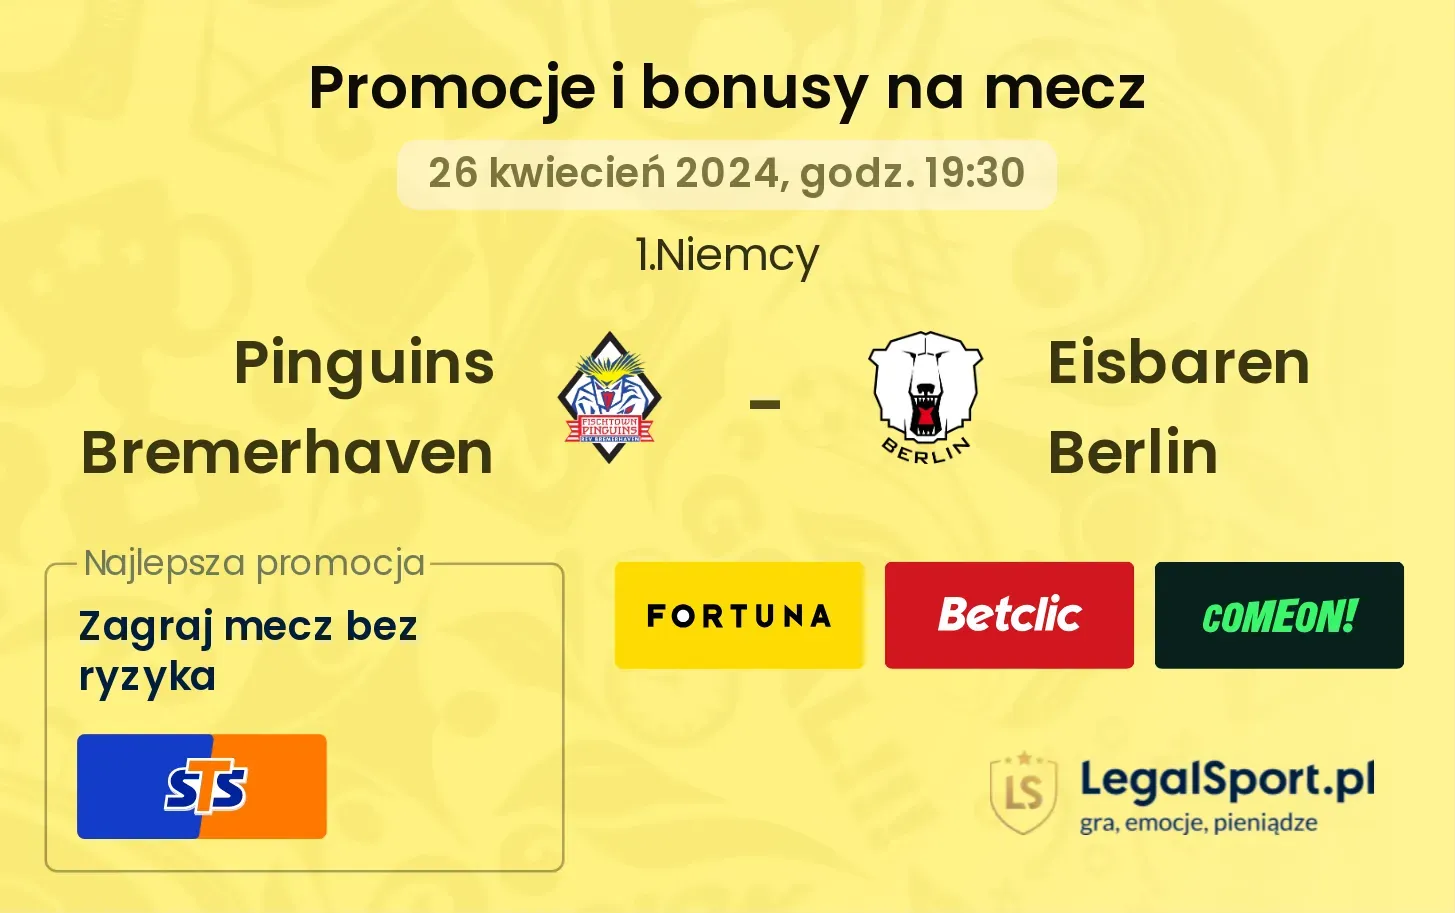 Pinguins Bremerhaven -  Eisbaren Berlin promocje bonusy na mecz